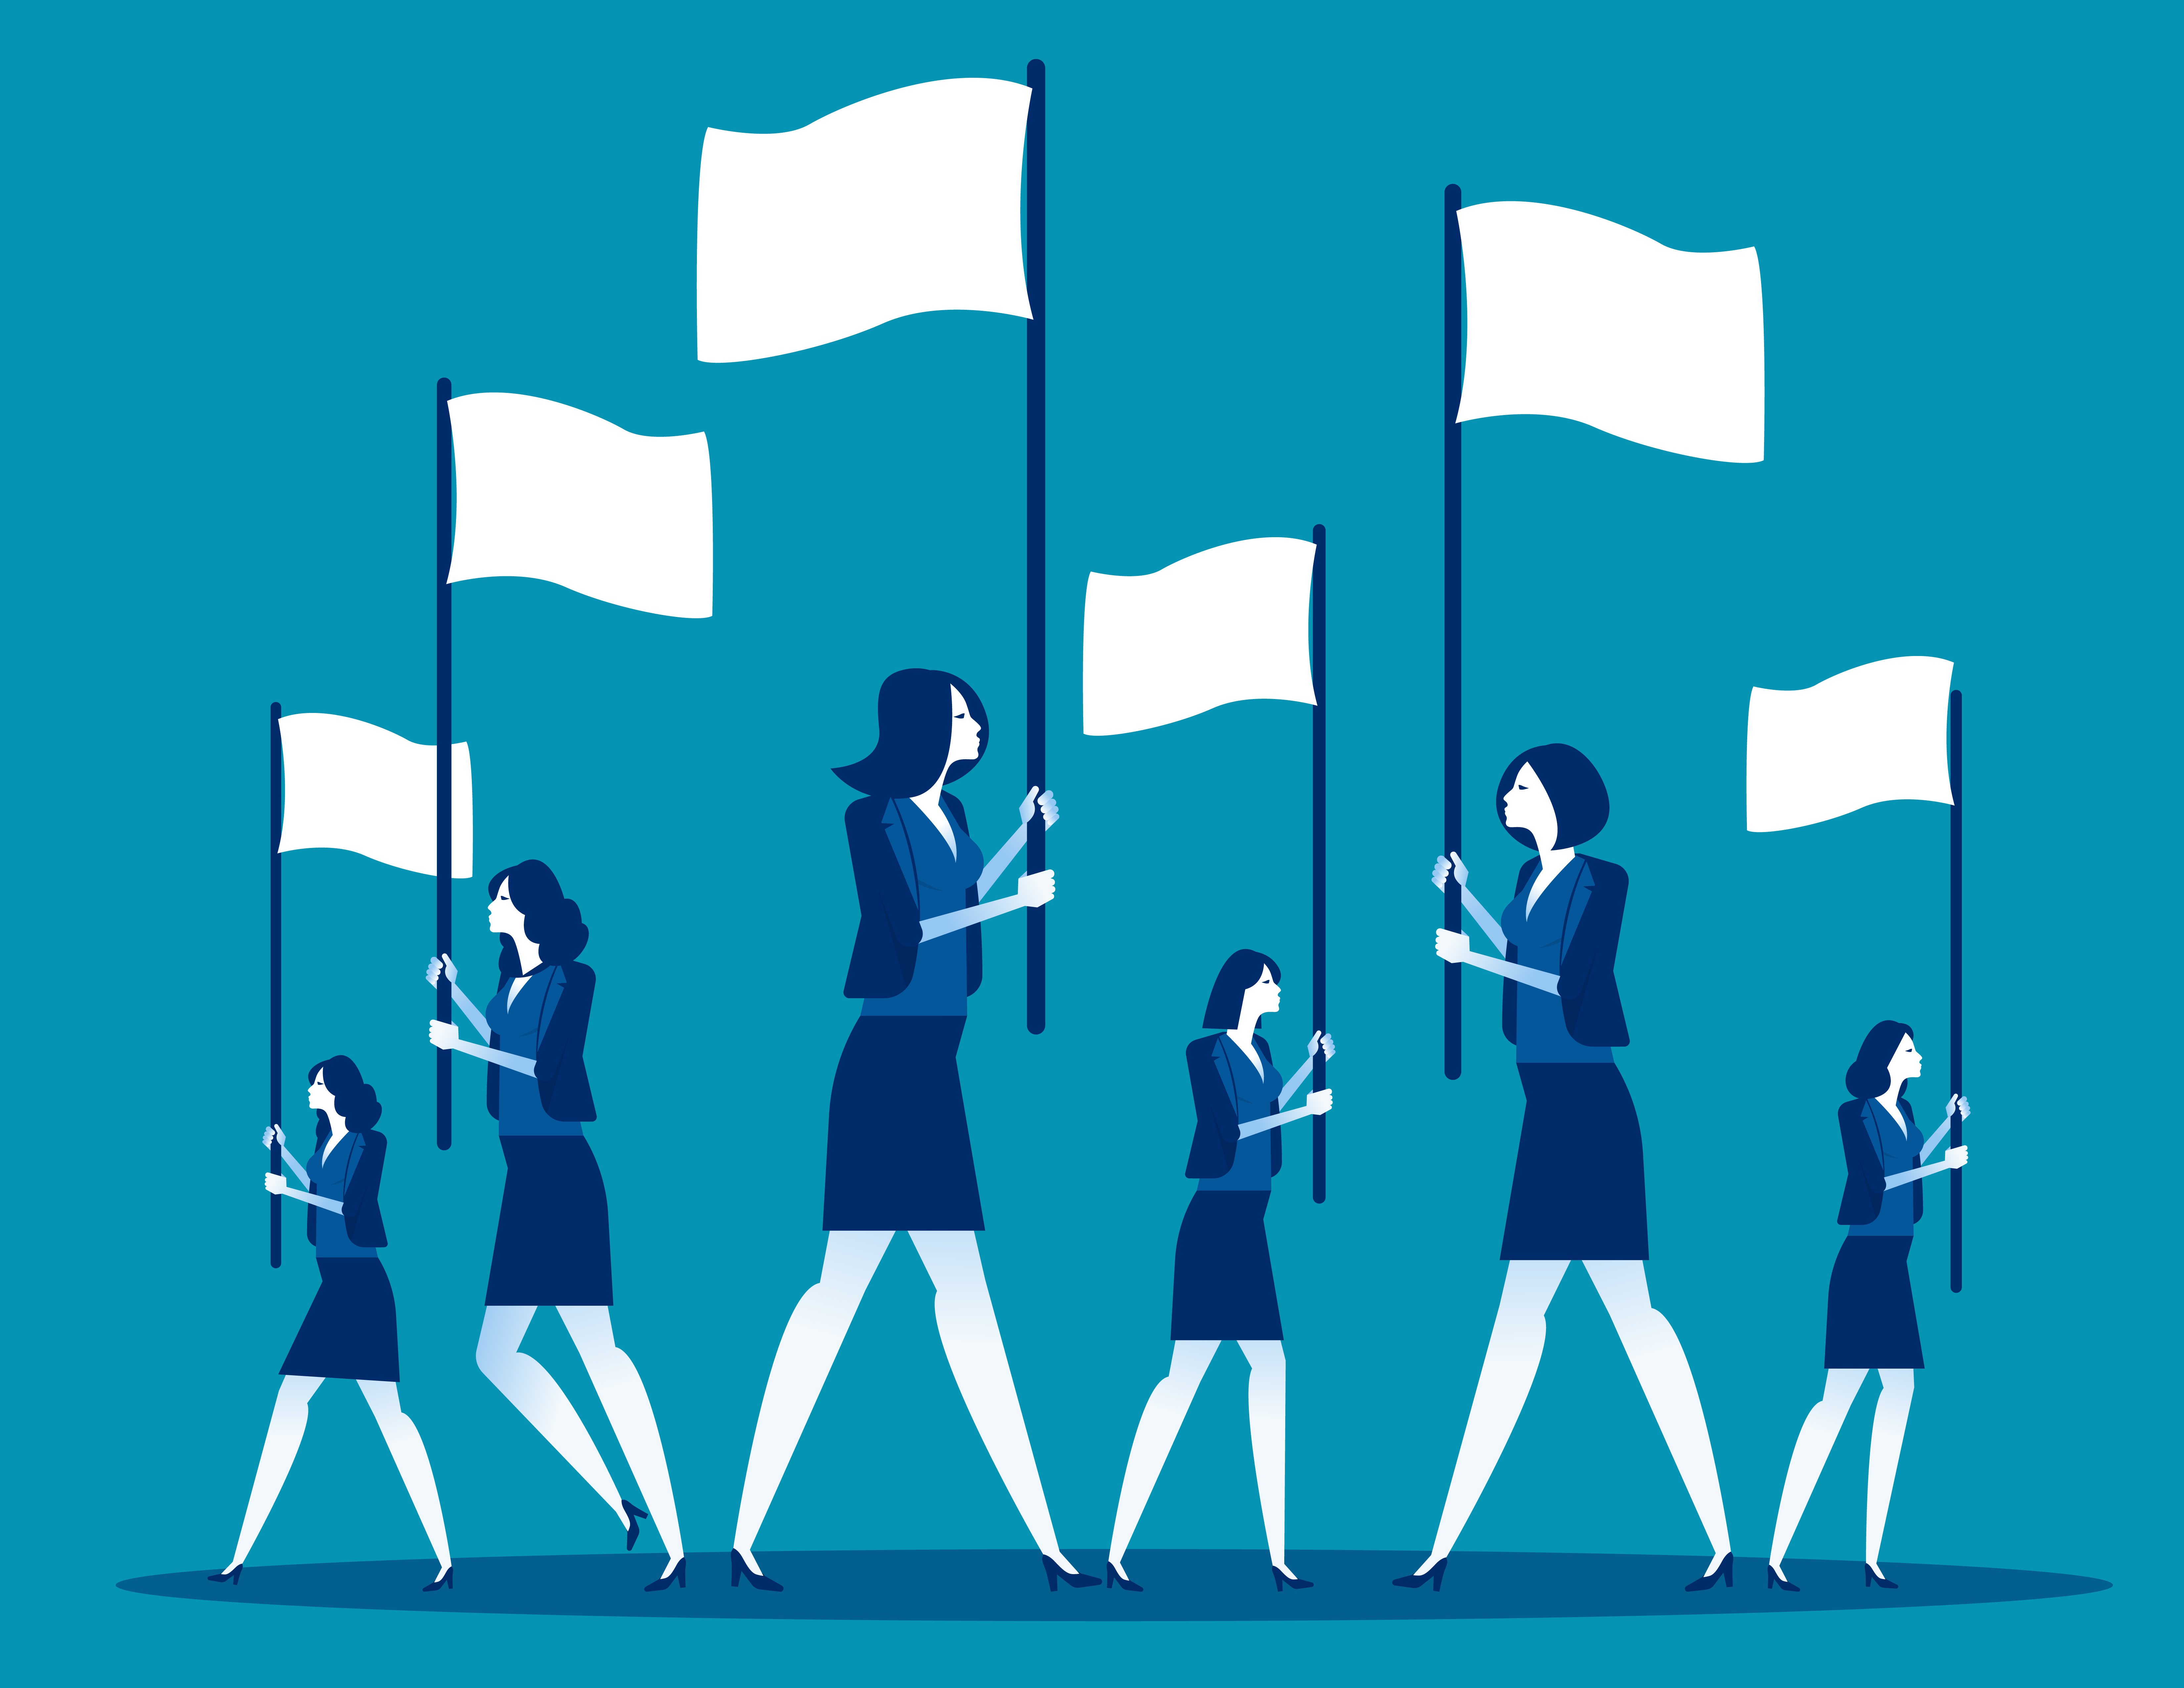 Business team holding flag. Concept business marketing vector illustration, Advertise, Teamwork.